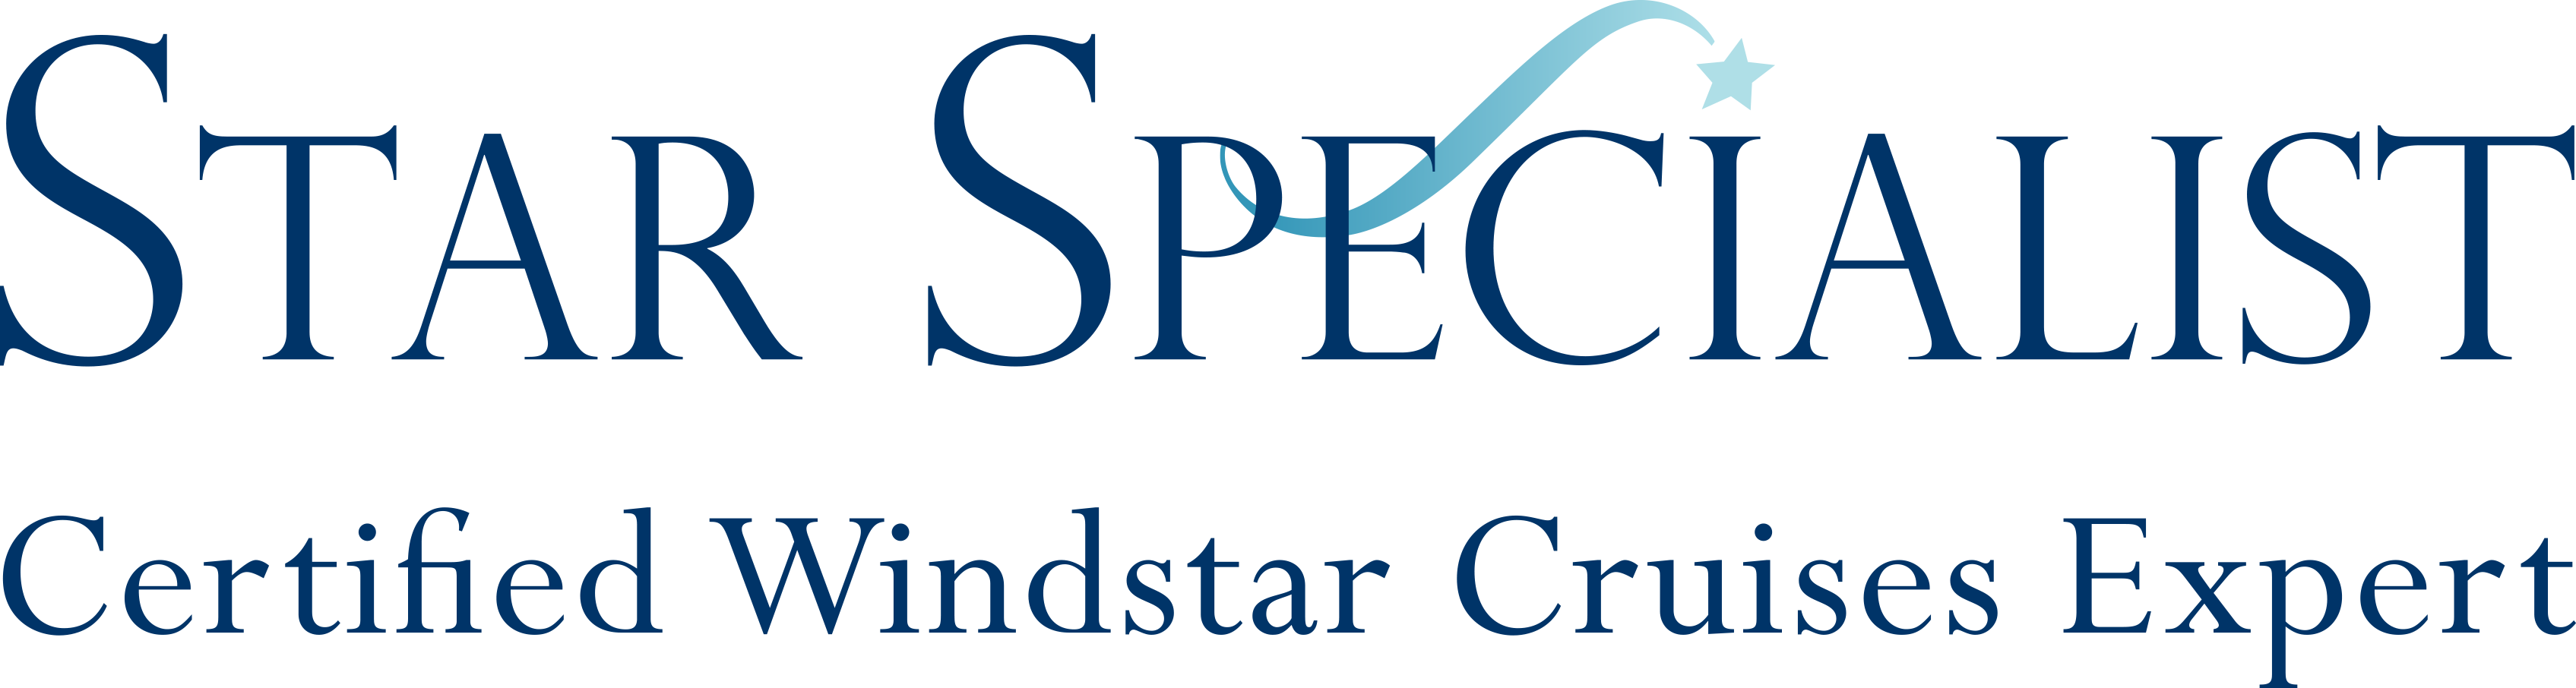 Windstar specialist logo